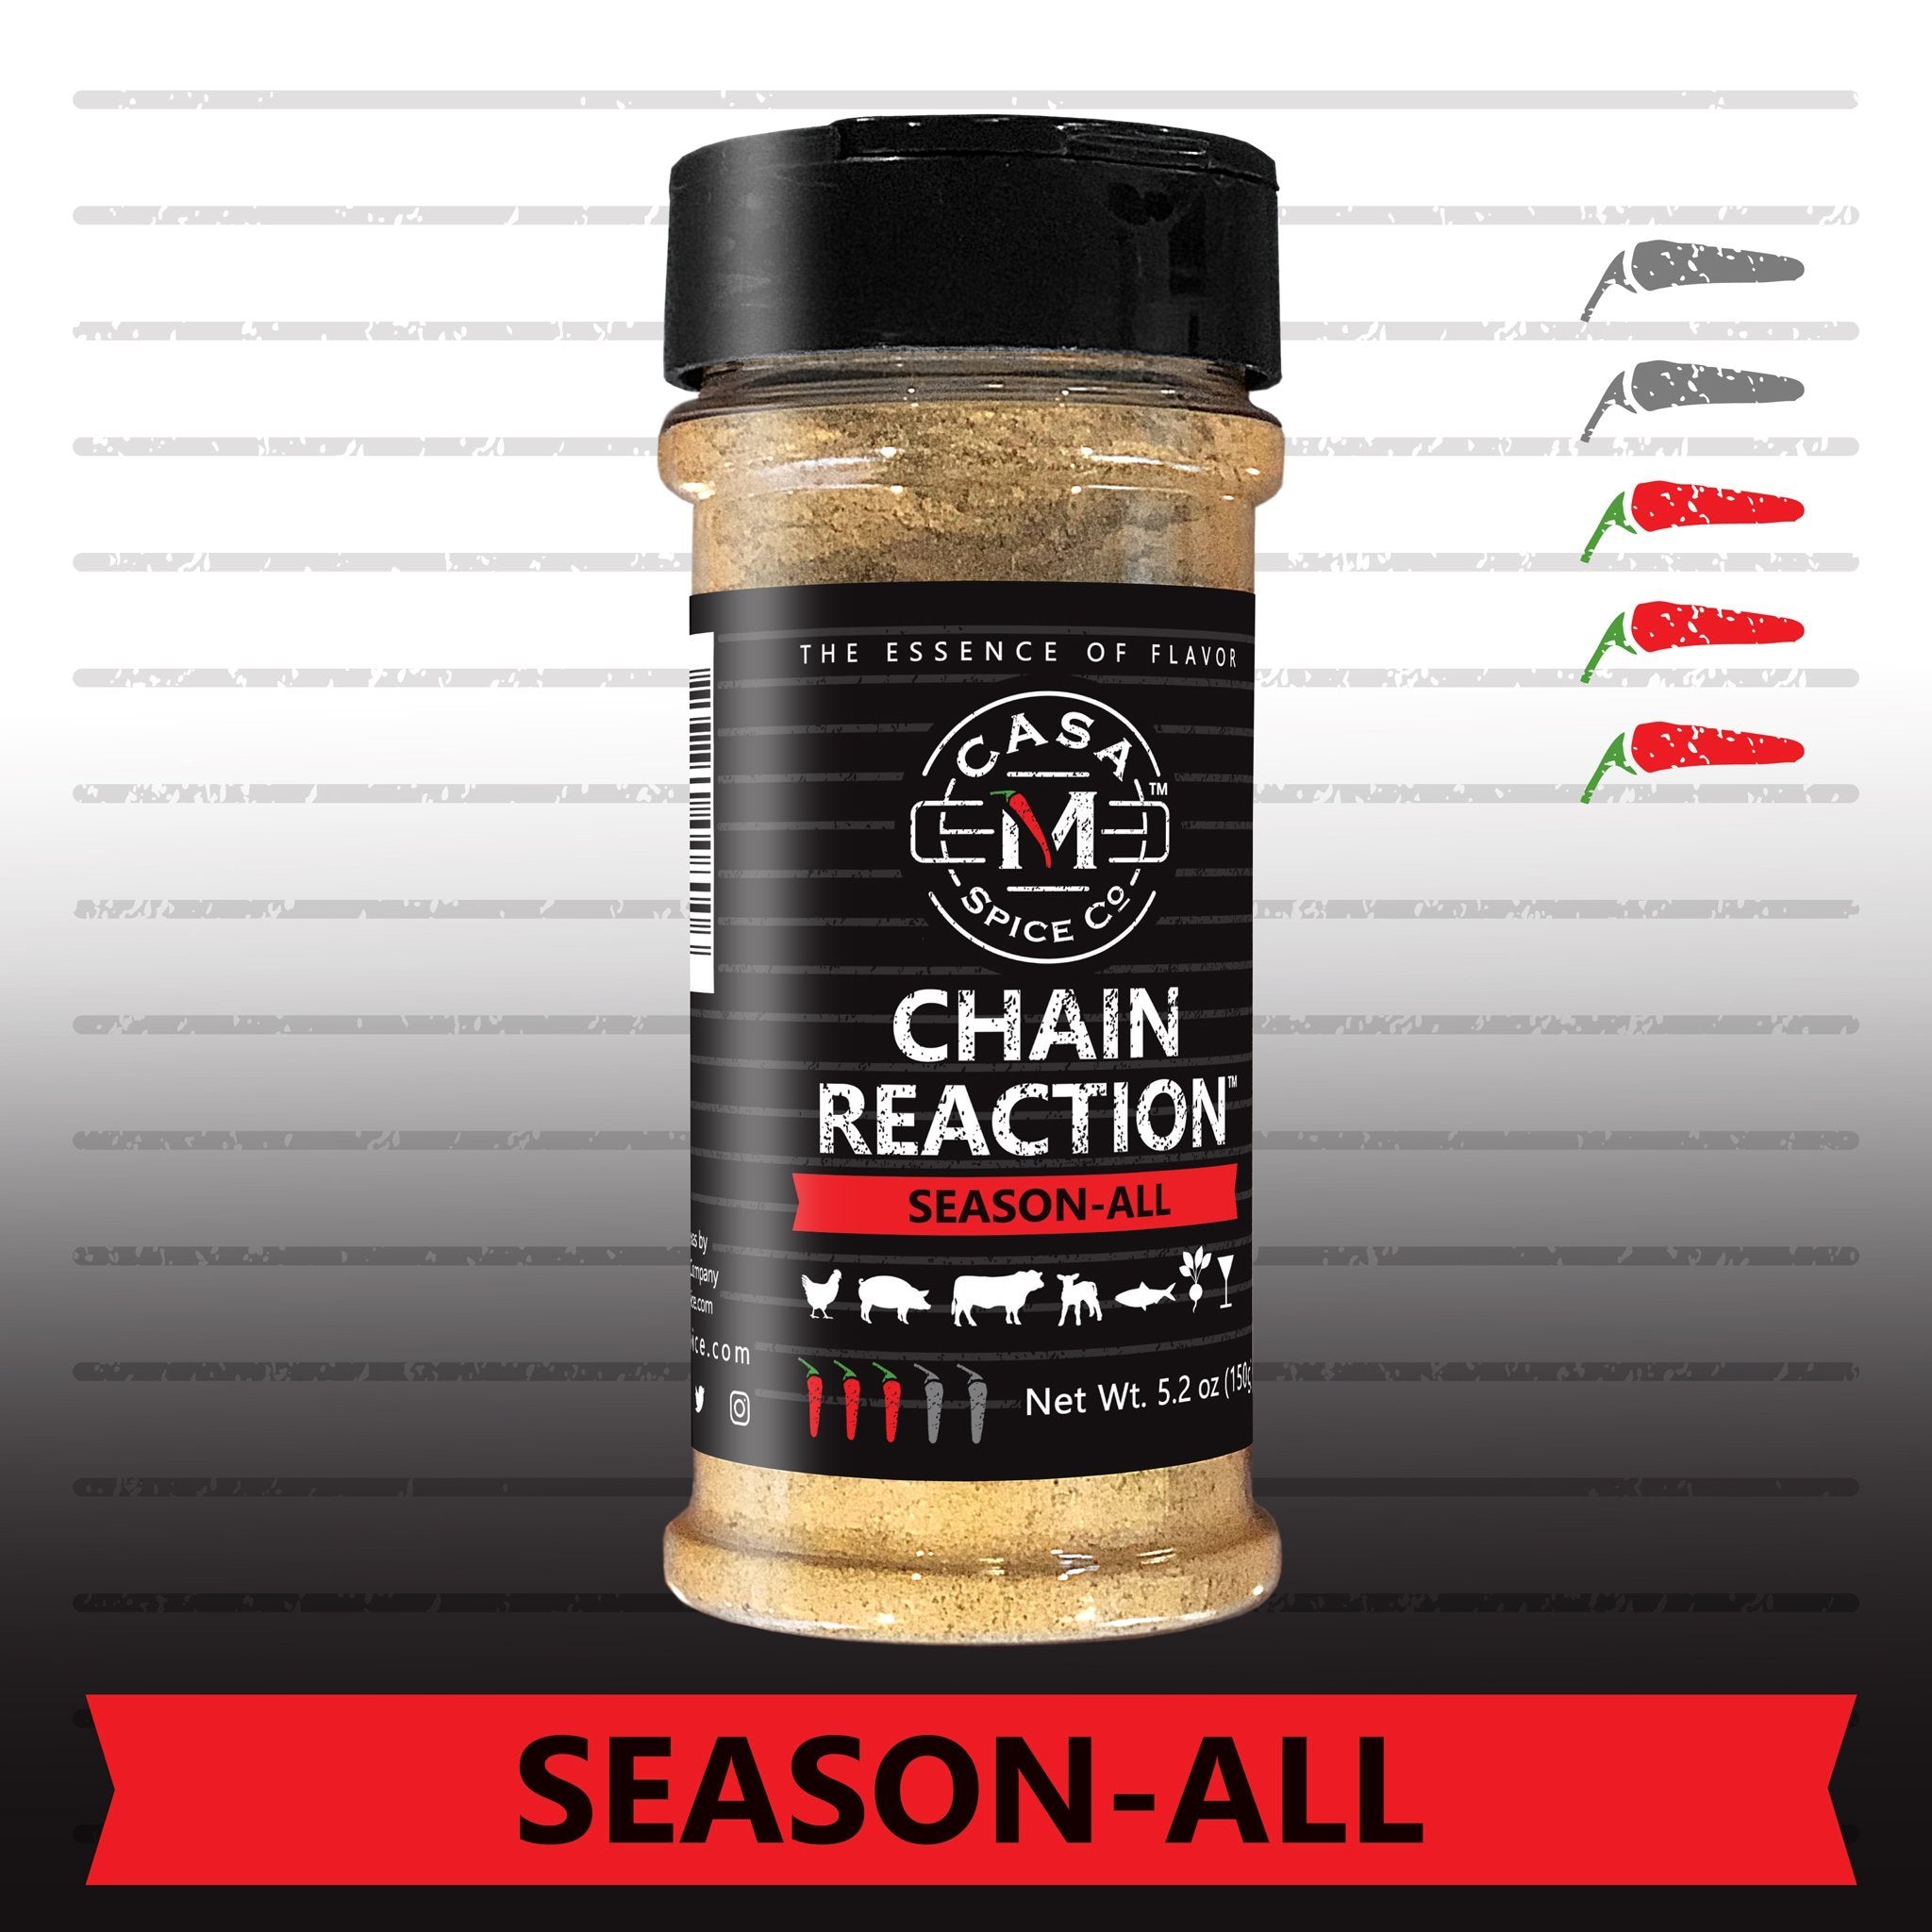 Casa M Spice Co Chain Reaction Season-All - 5 oz